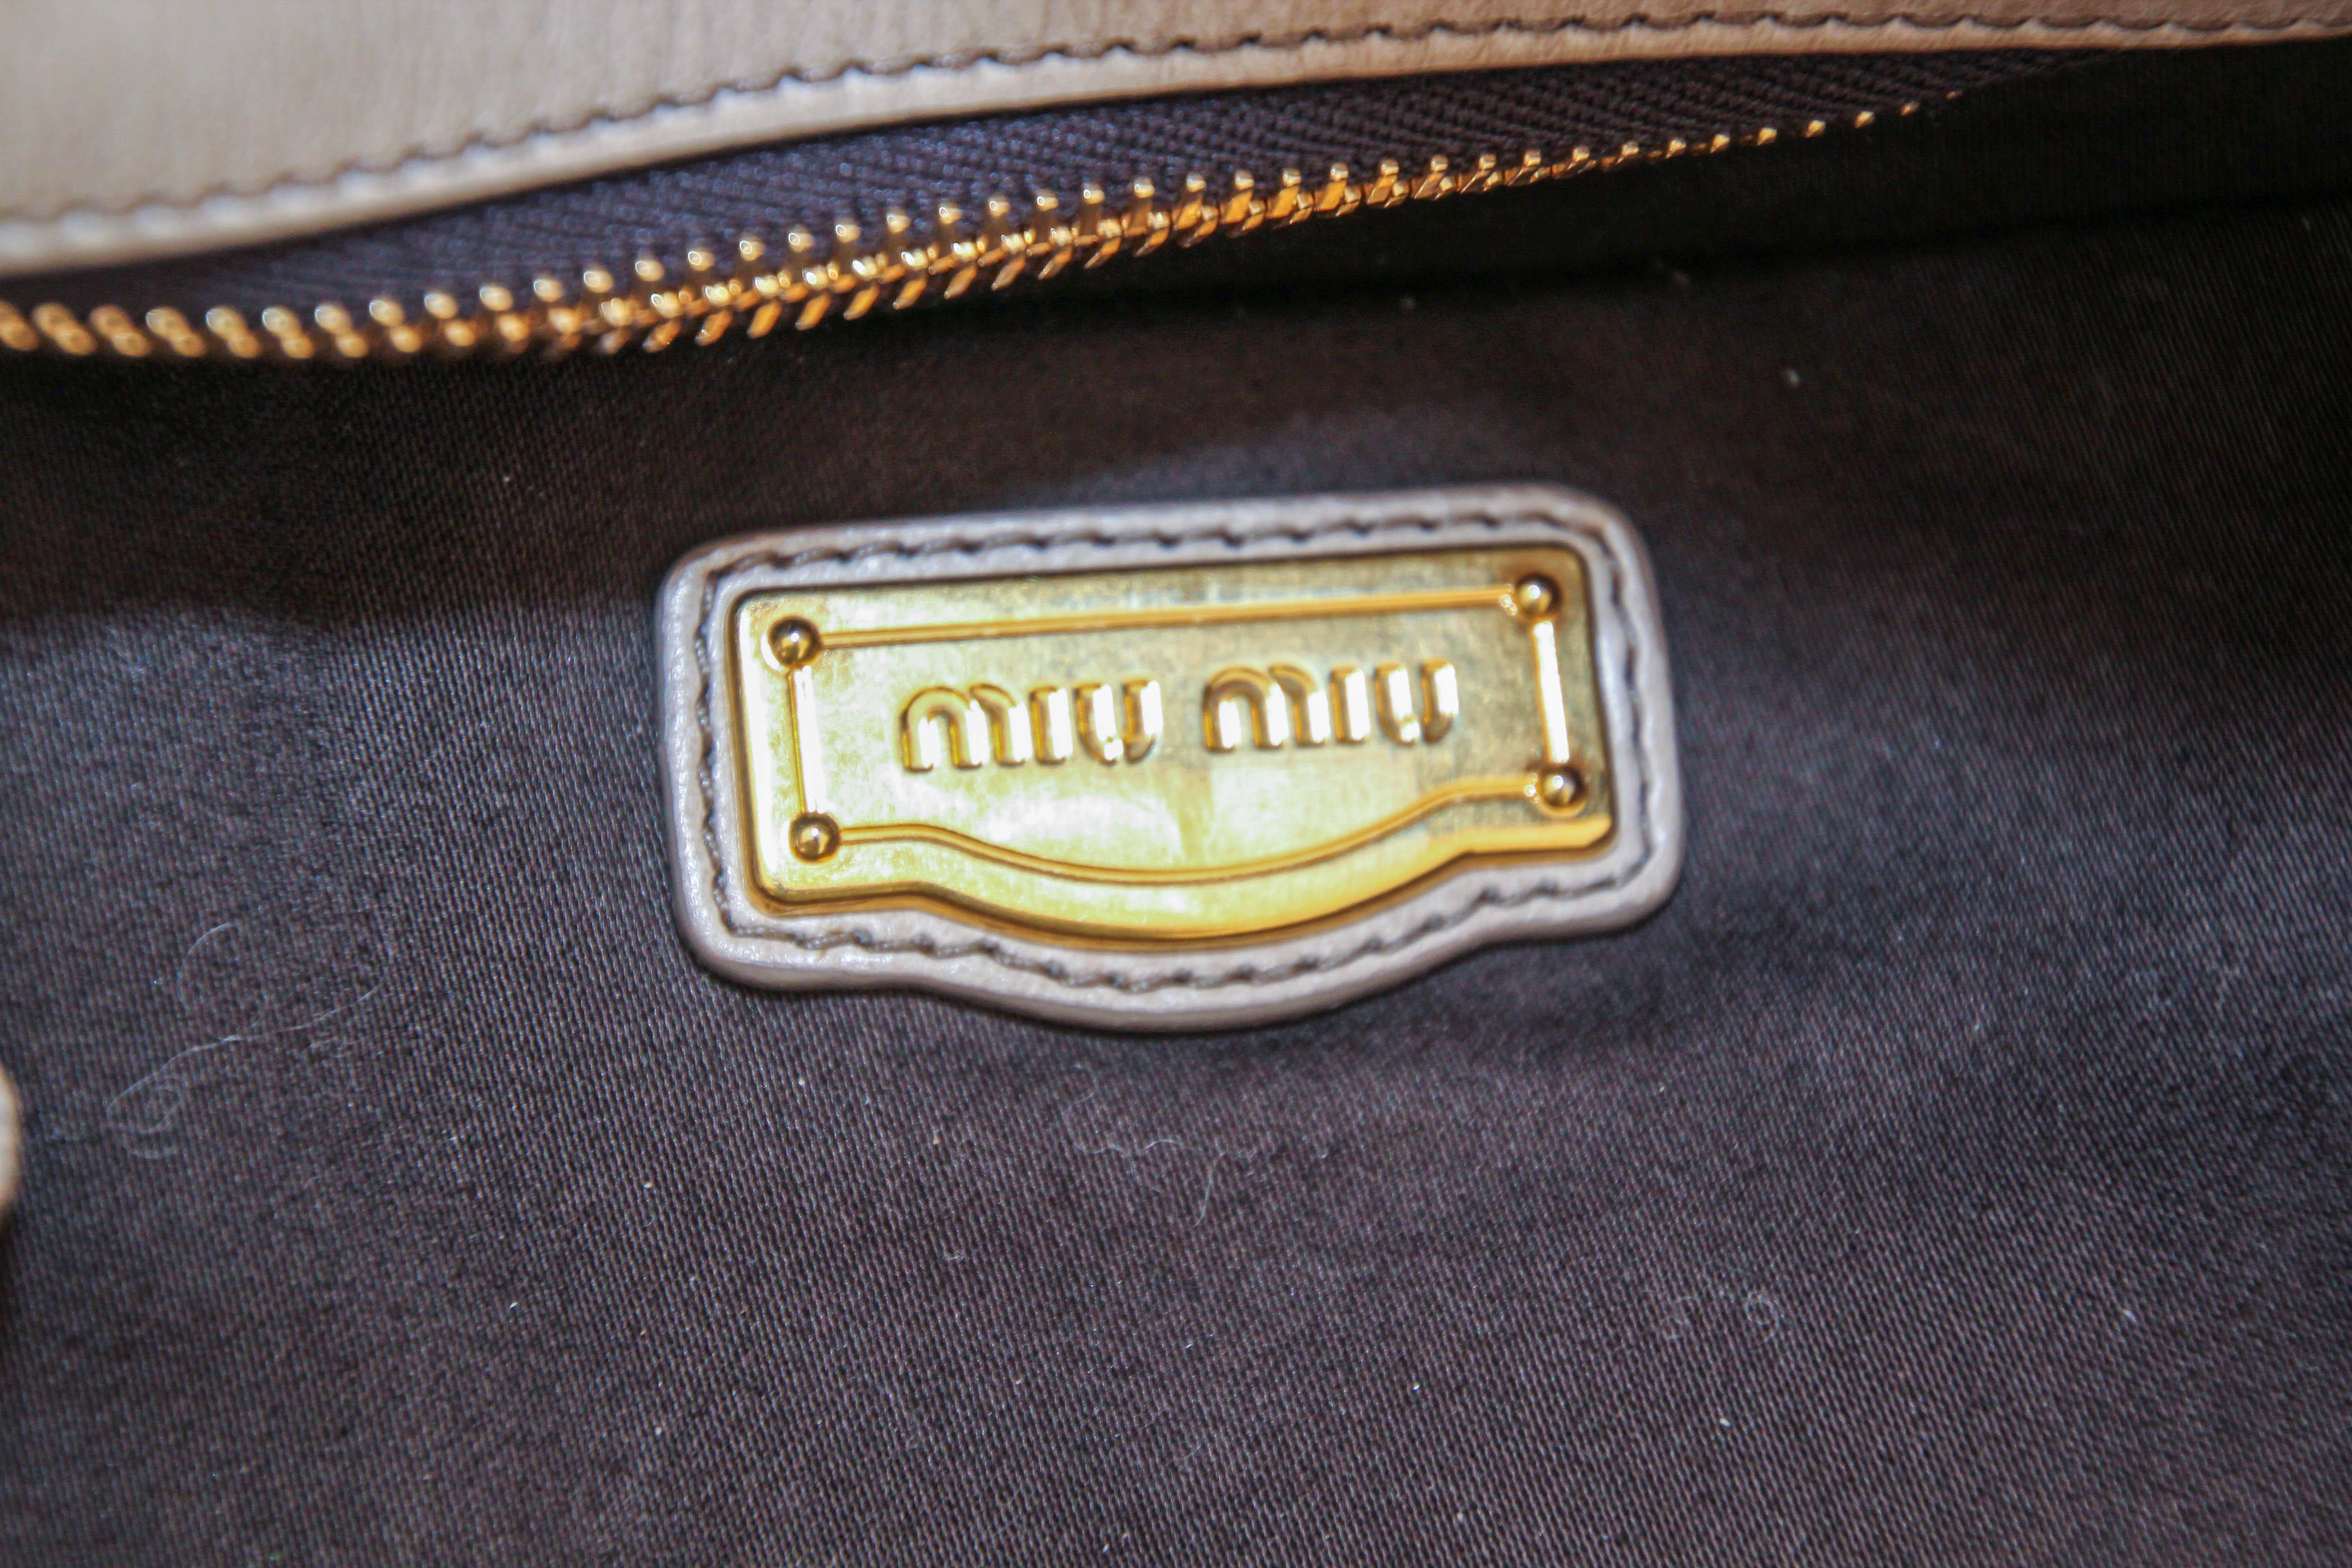 MIU MIU Beige Vitello Lux Bow Leather Hand Bag Satchel Tote For Sale 3